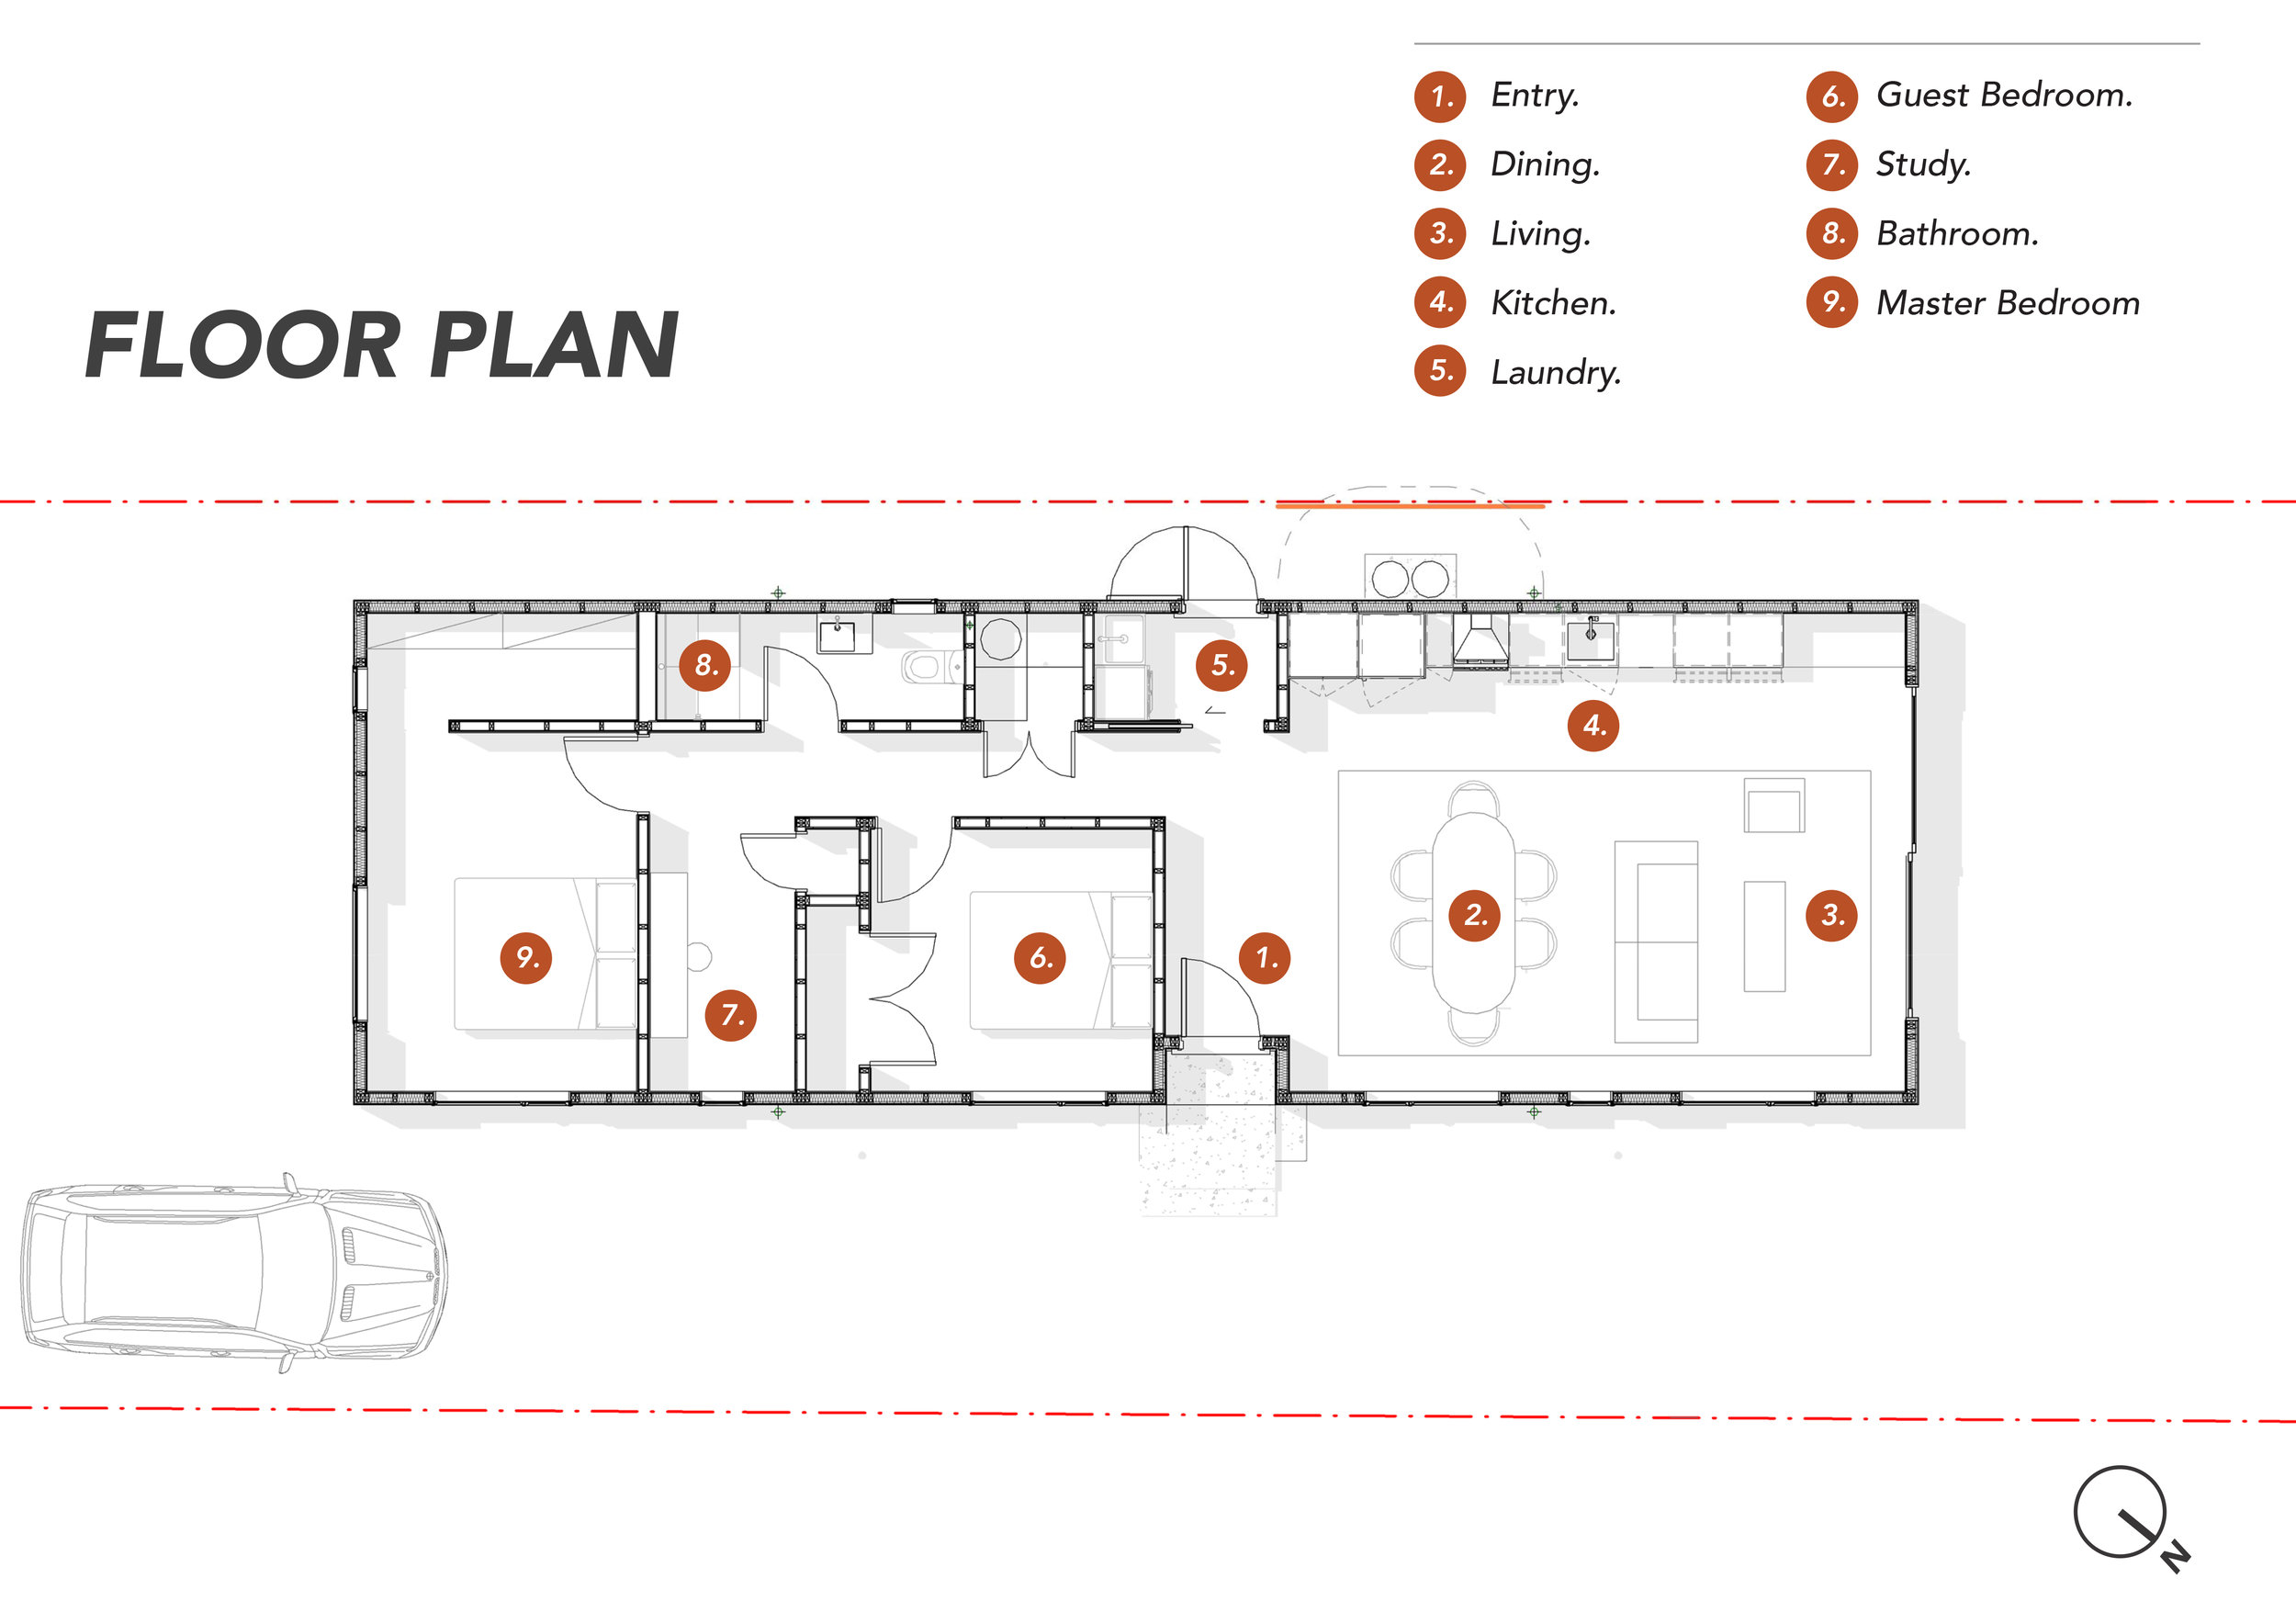 House_Floorplan.jpg